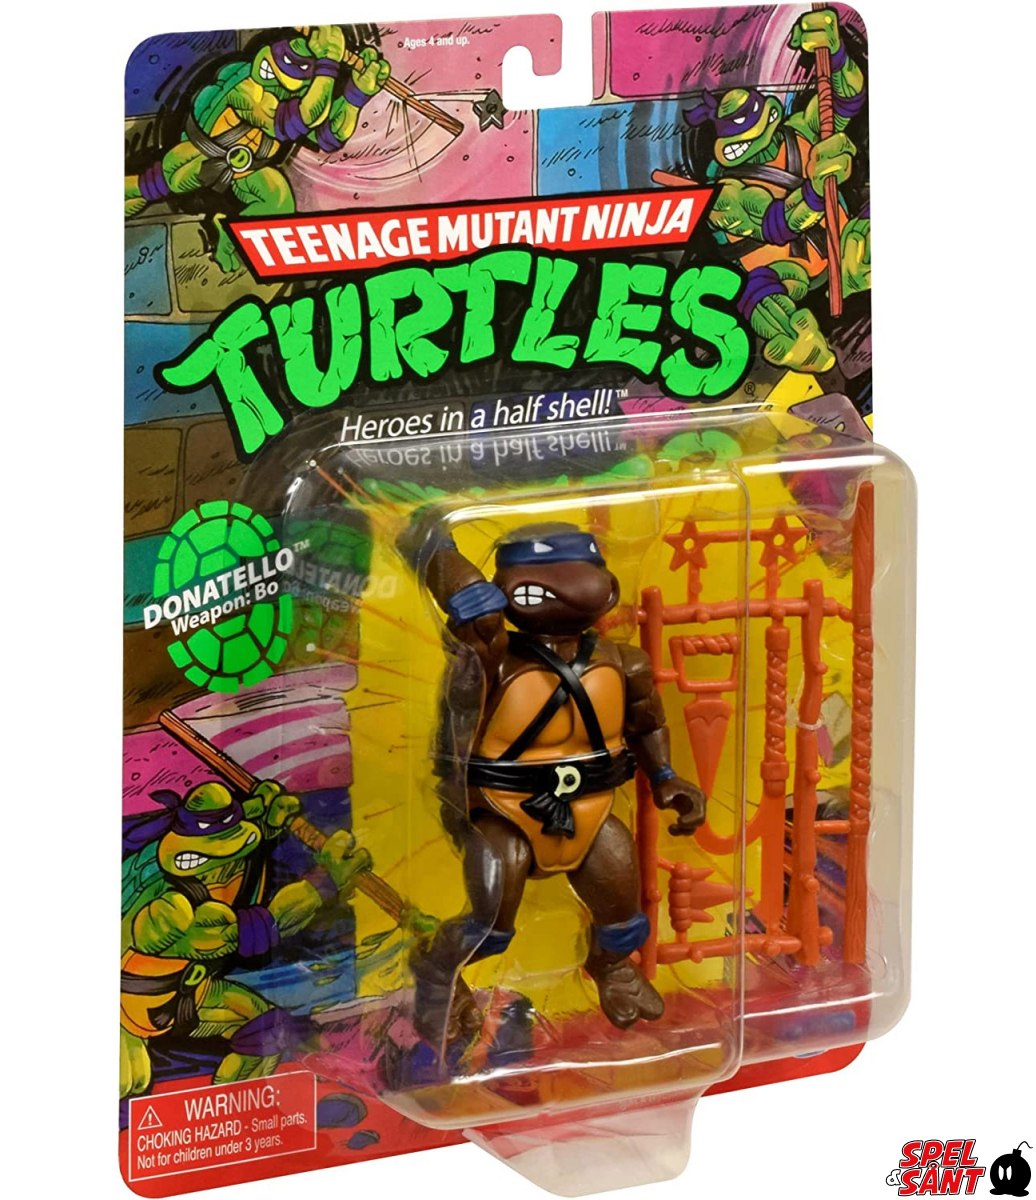 Automatisering Kæreste tilnærmelse Teenage Mutant Ninja Turtles Donatello Figure - Spel & Sånt: The video game  store with the happiest customers